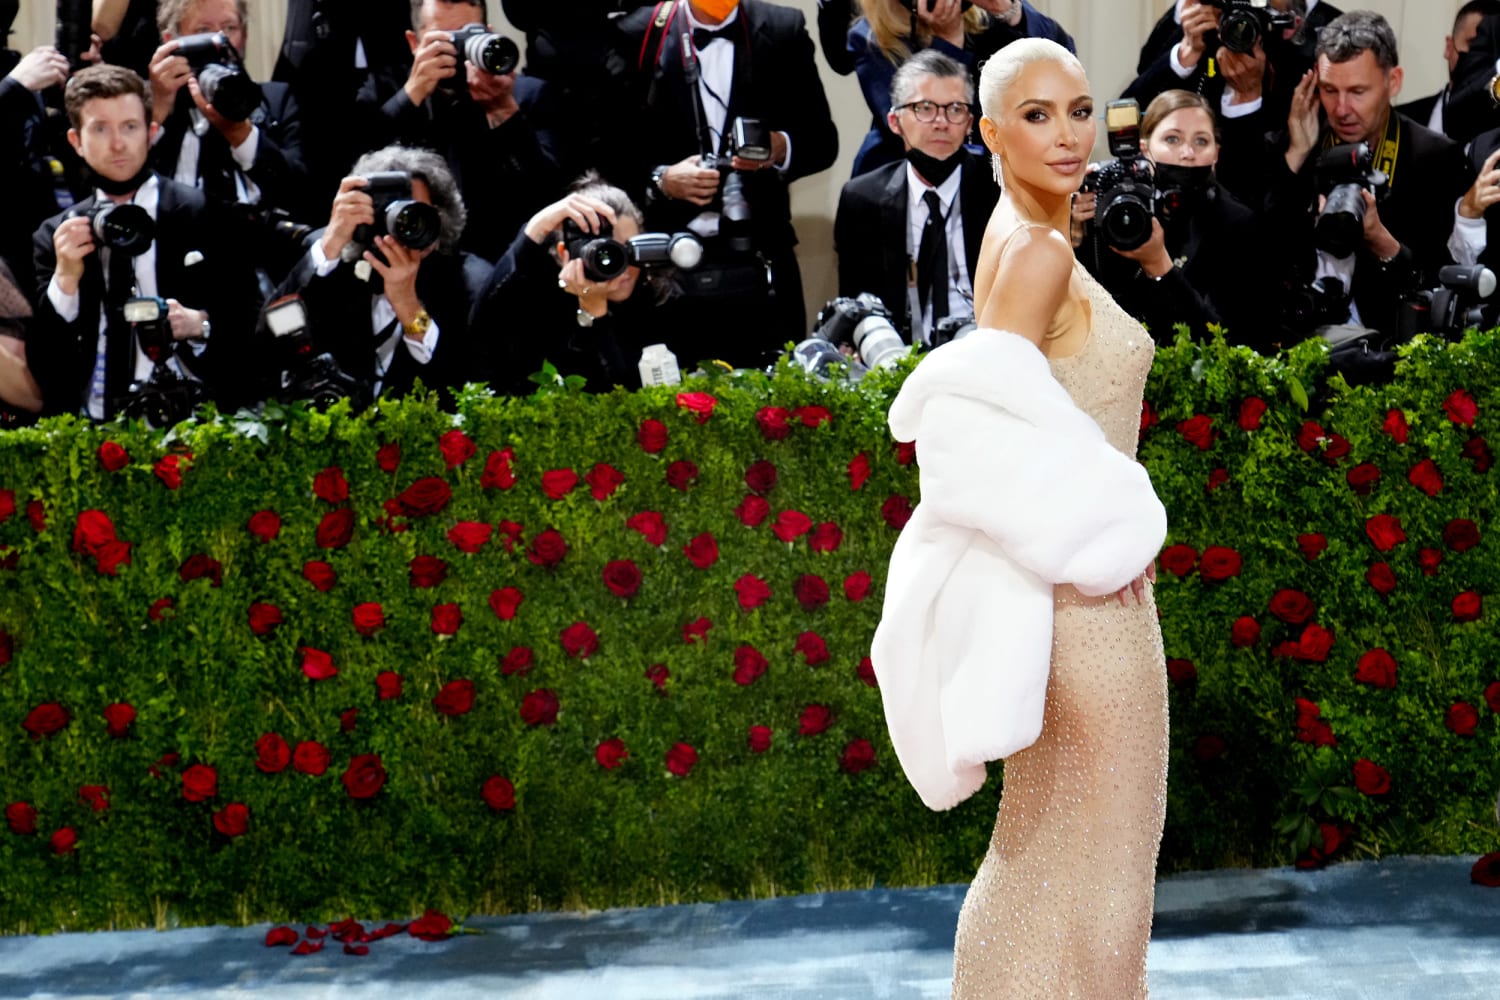 Photos show Kardashian did visible damage to Monroe dress - Los Angeles  Times